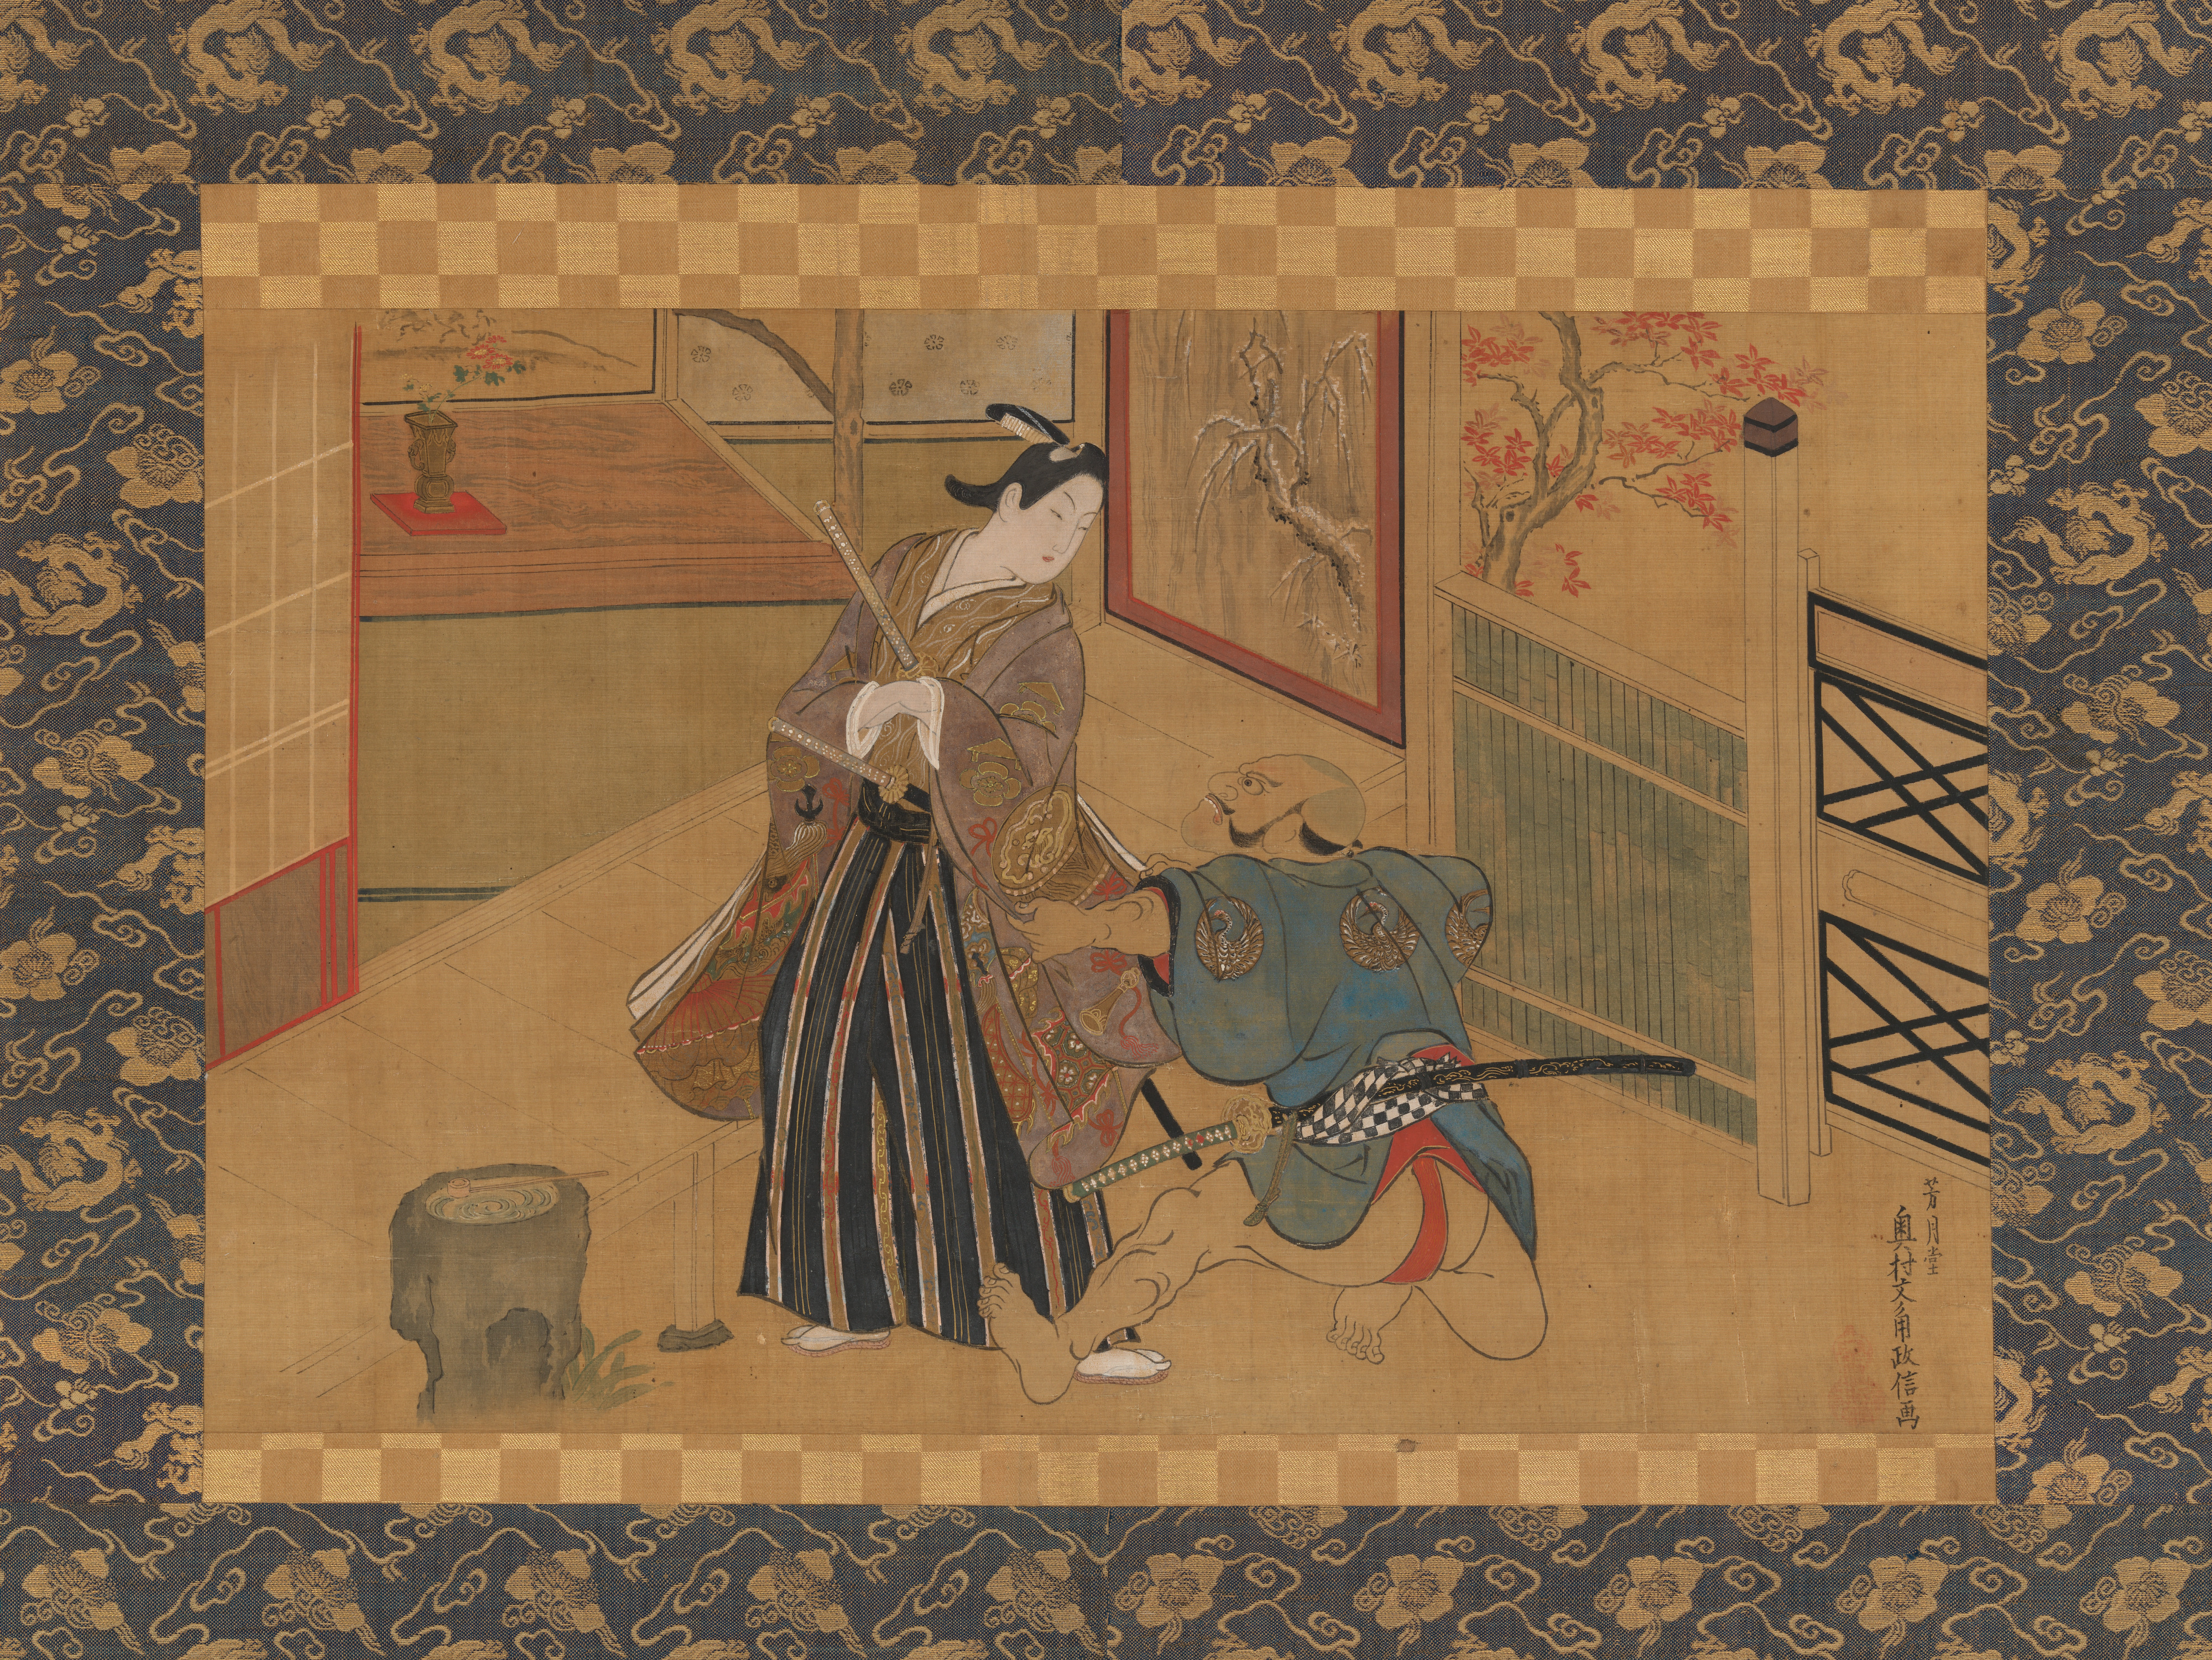 Okumura Masanobu - Kabuki Play Kusazuribiki from the Tales of Soga (Soga 
monogatari)